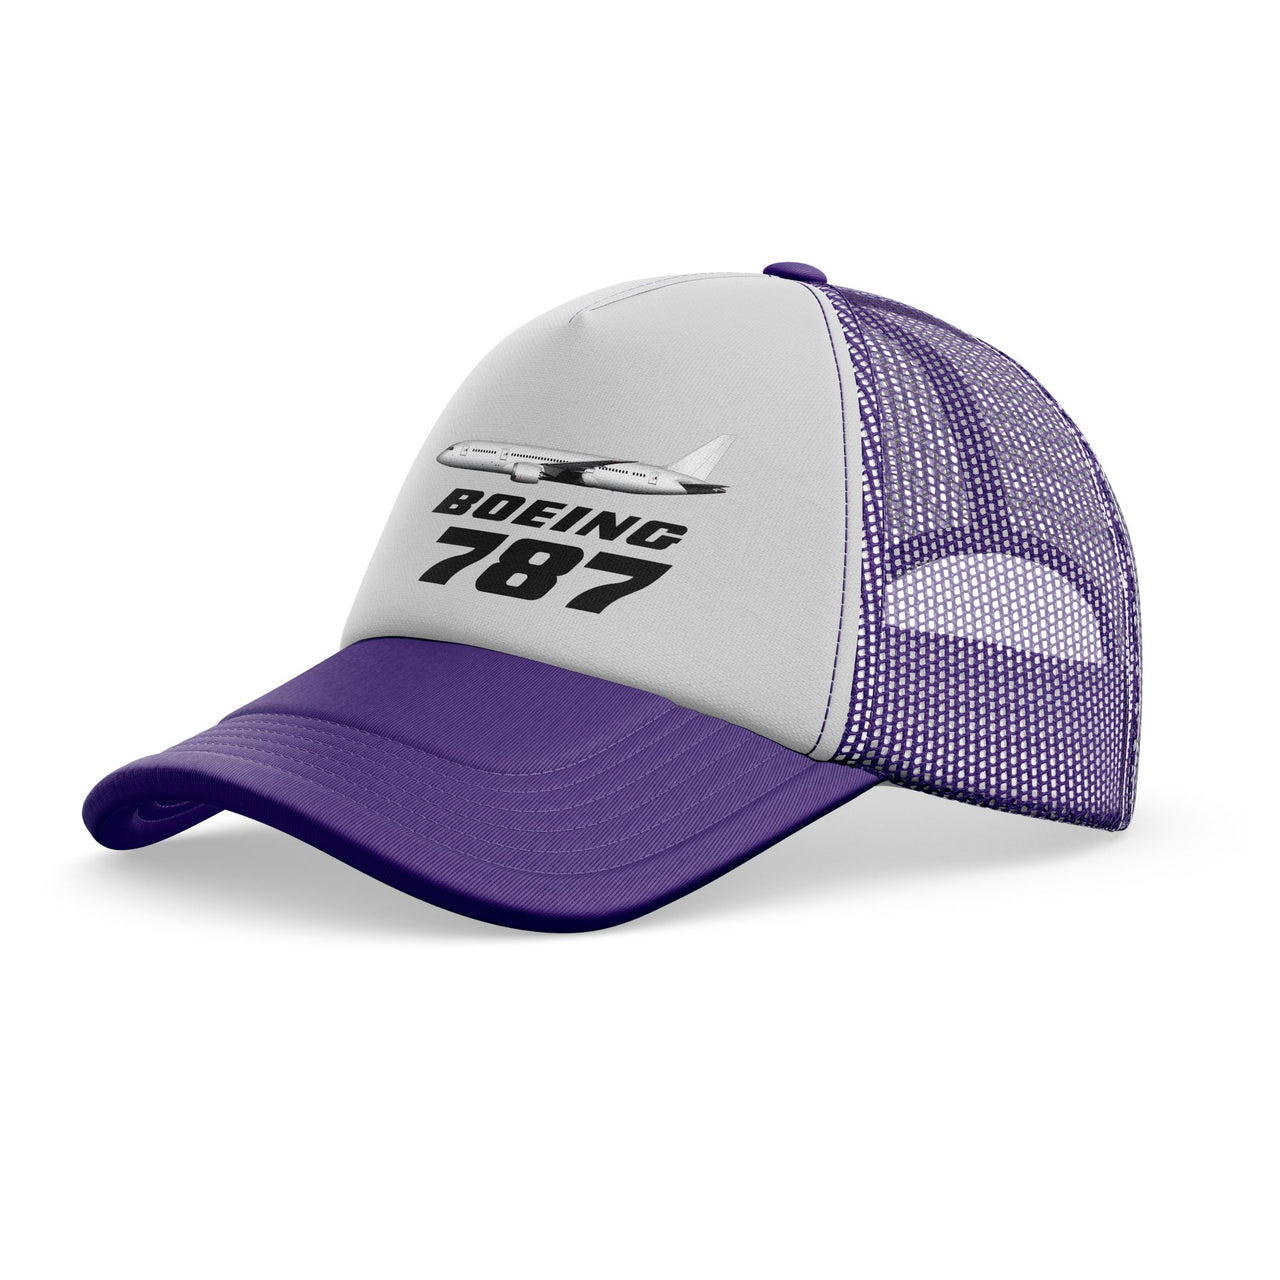 The Boeing 787 Designed Trucker Caps & Hats